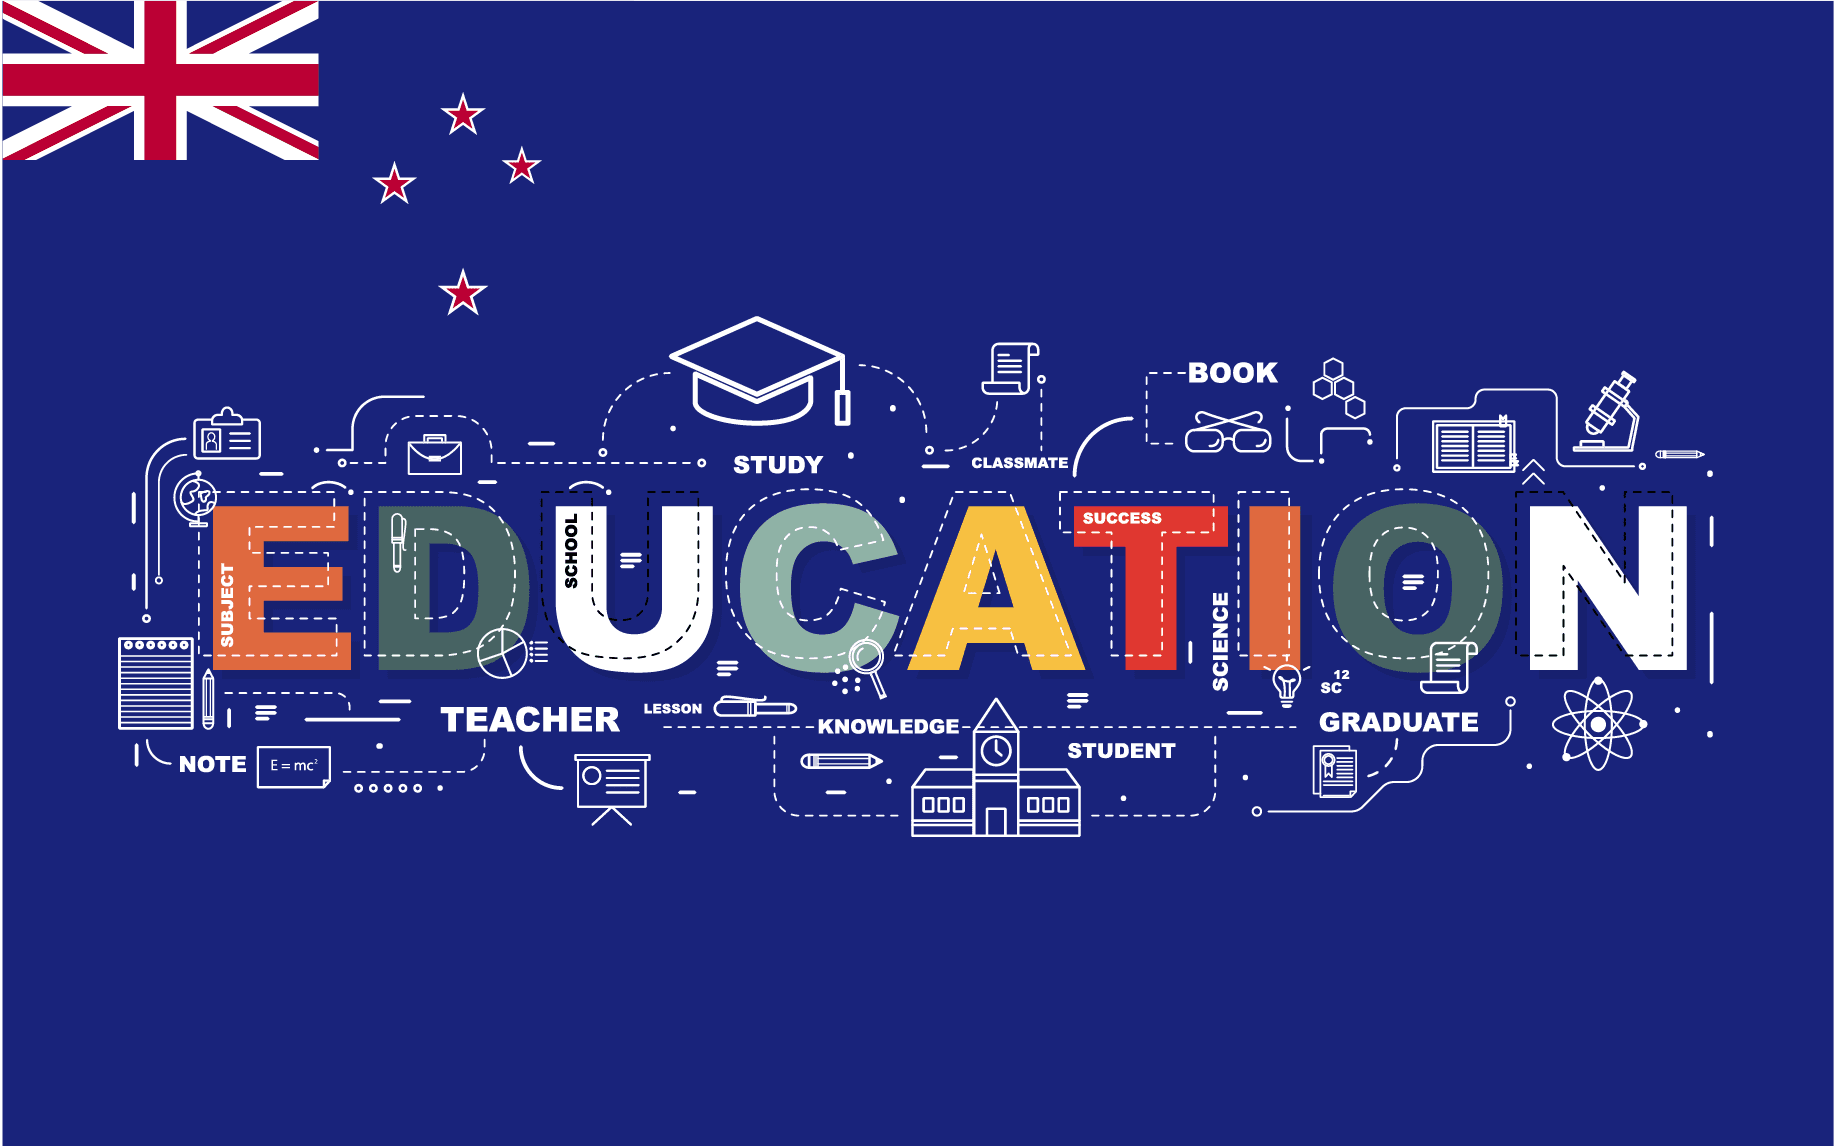 NZ education strategy amendment published